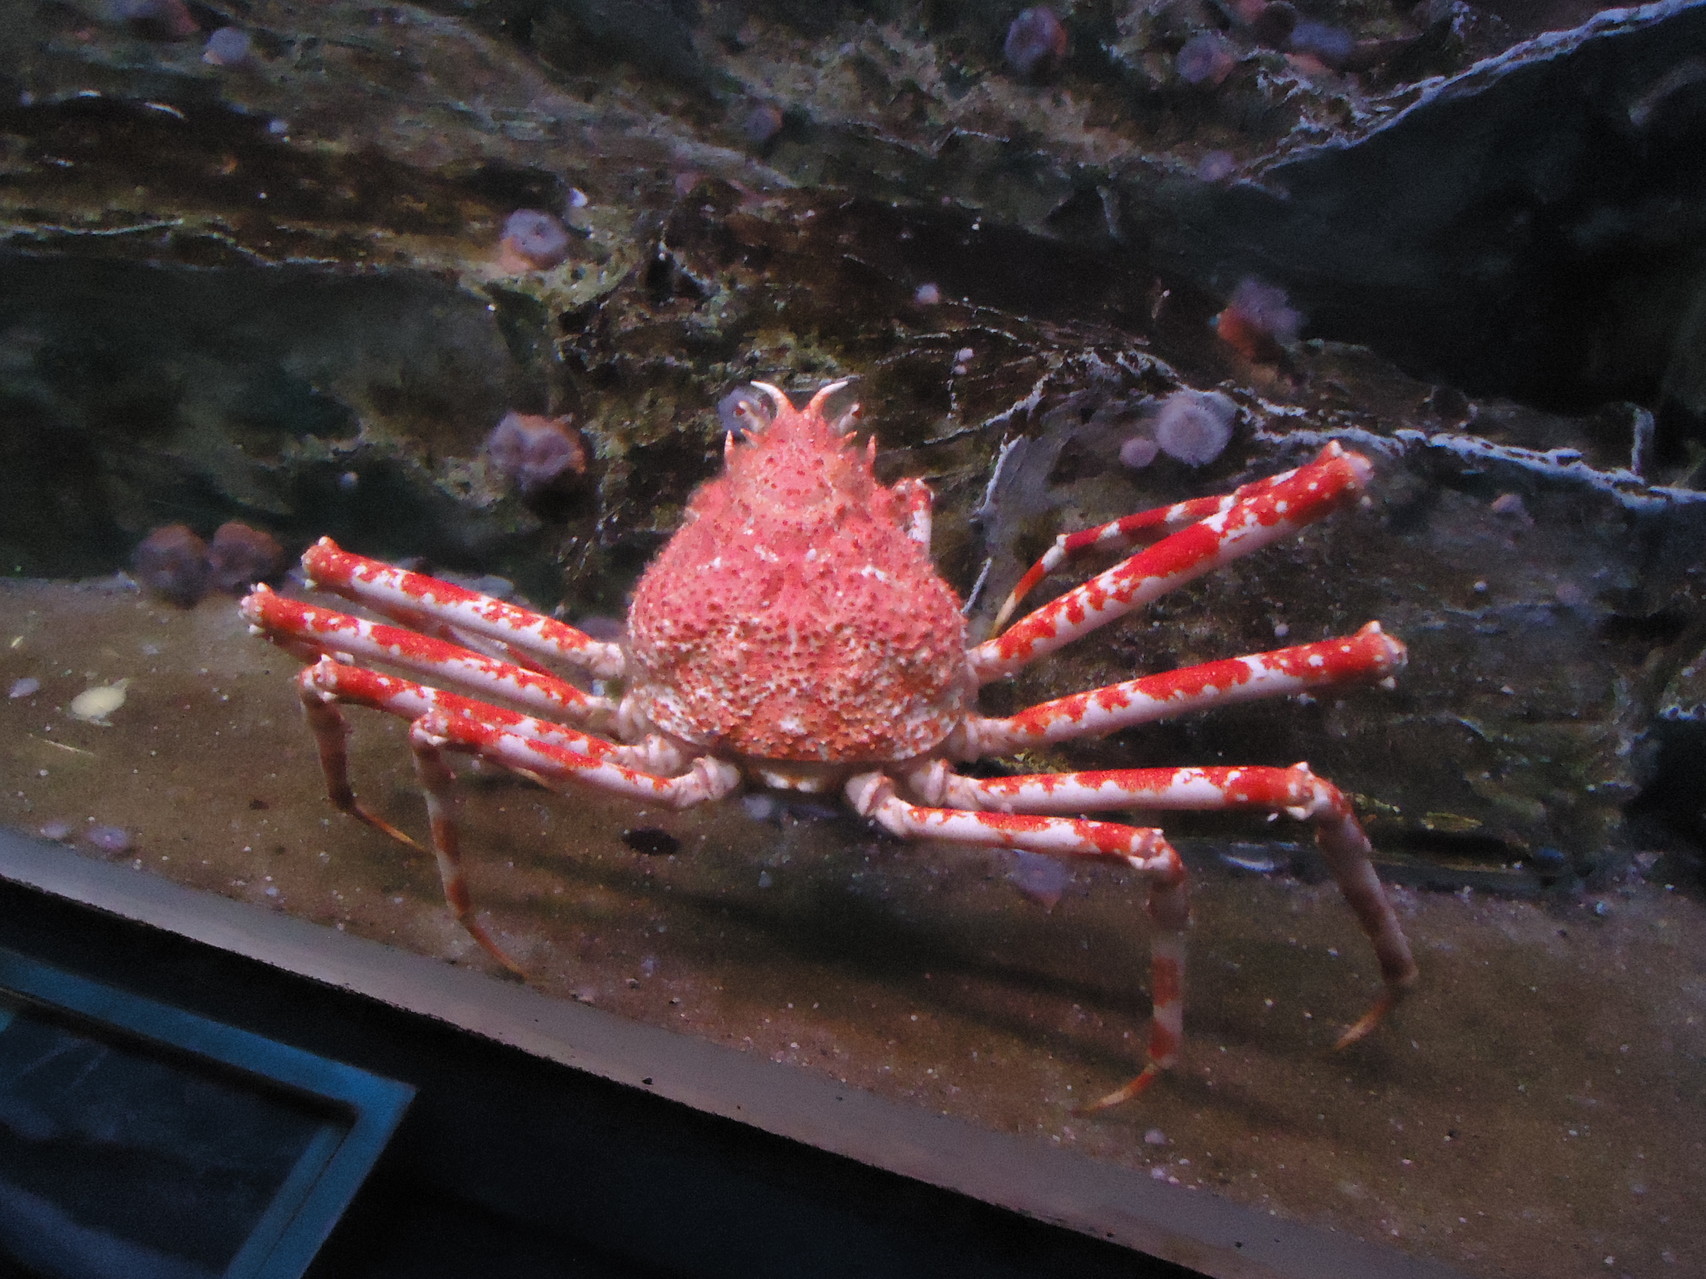 Meeresmuseum - und erschreckend grosse Krabben...